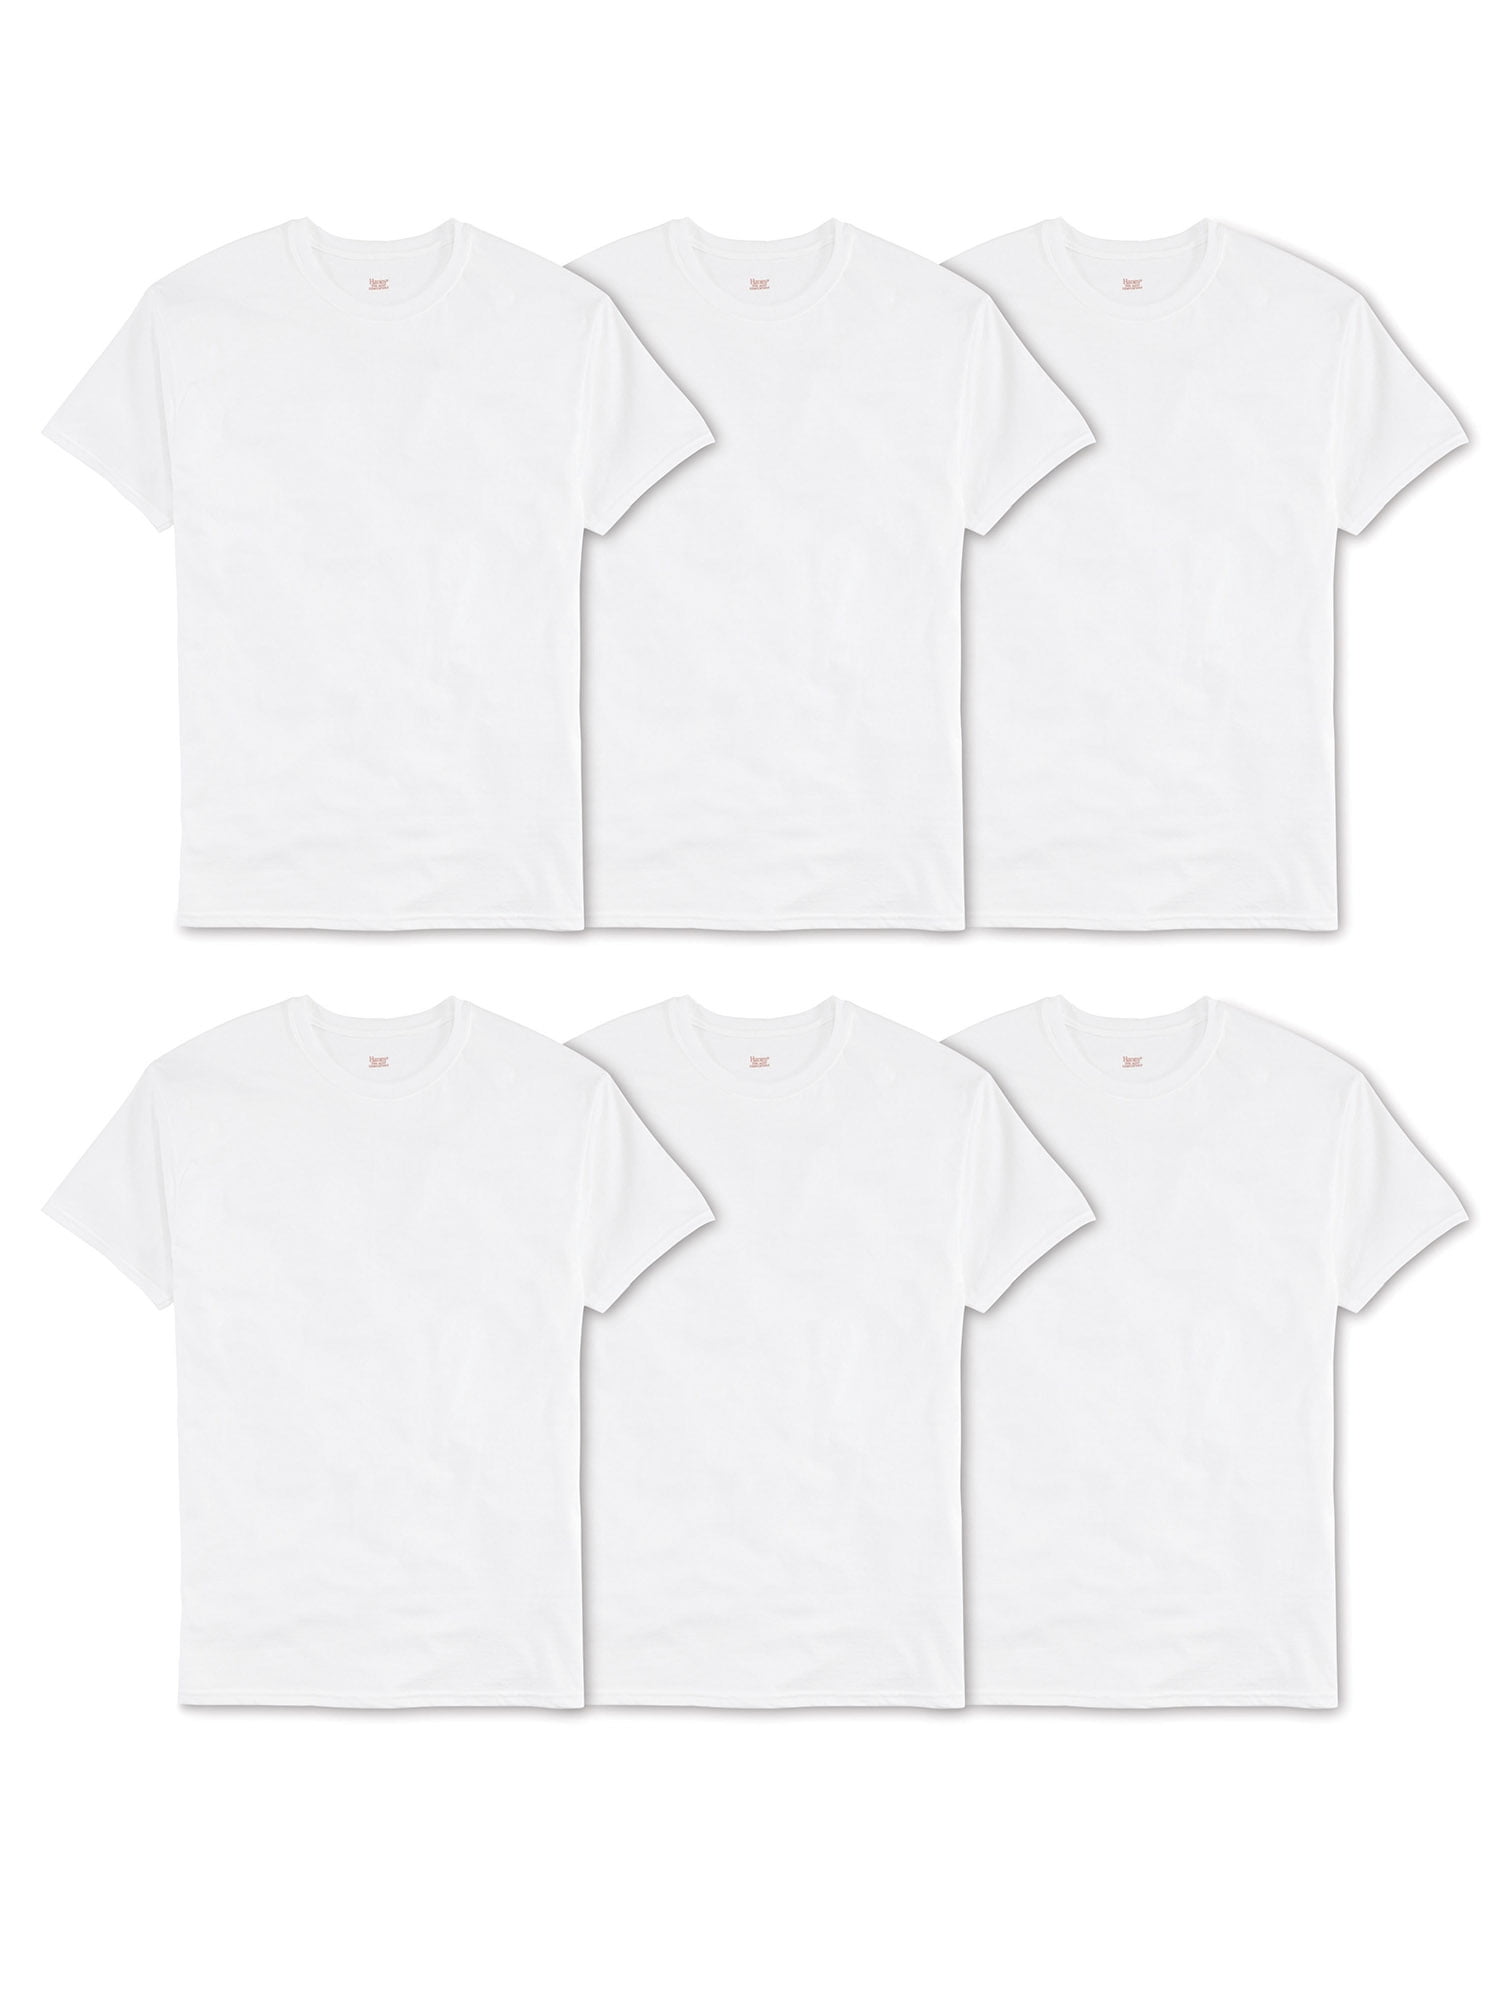 T-Shirt Undershirts, 6 Pack - Walmart 